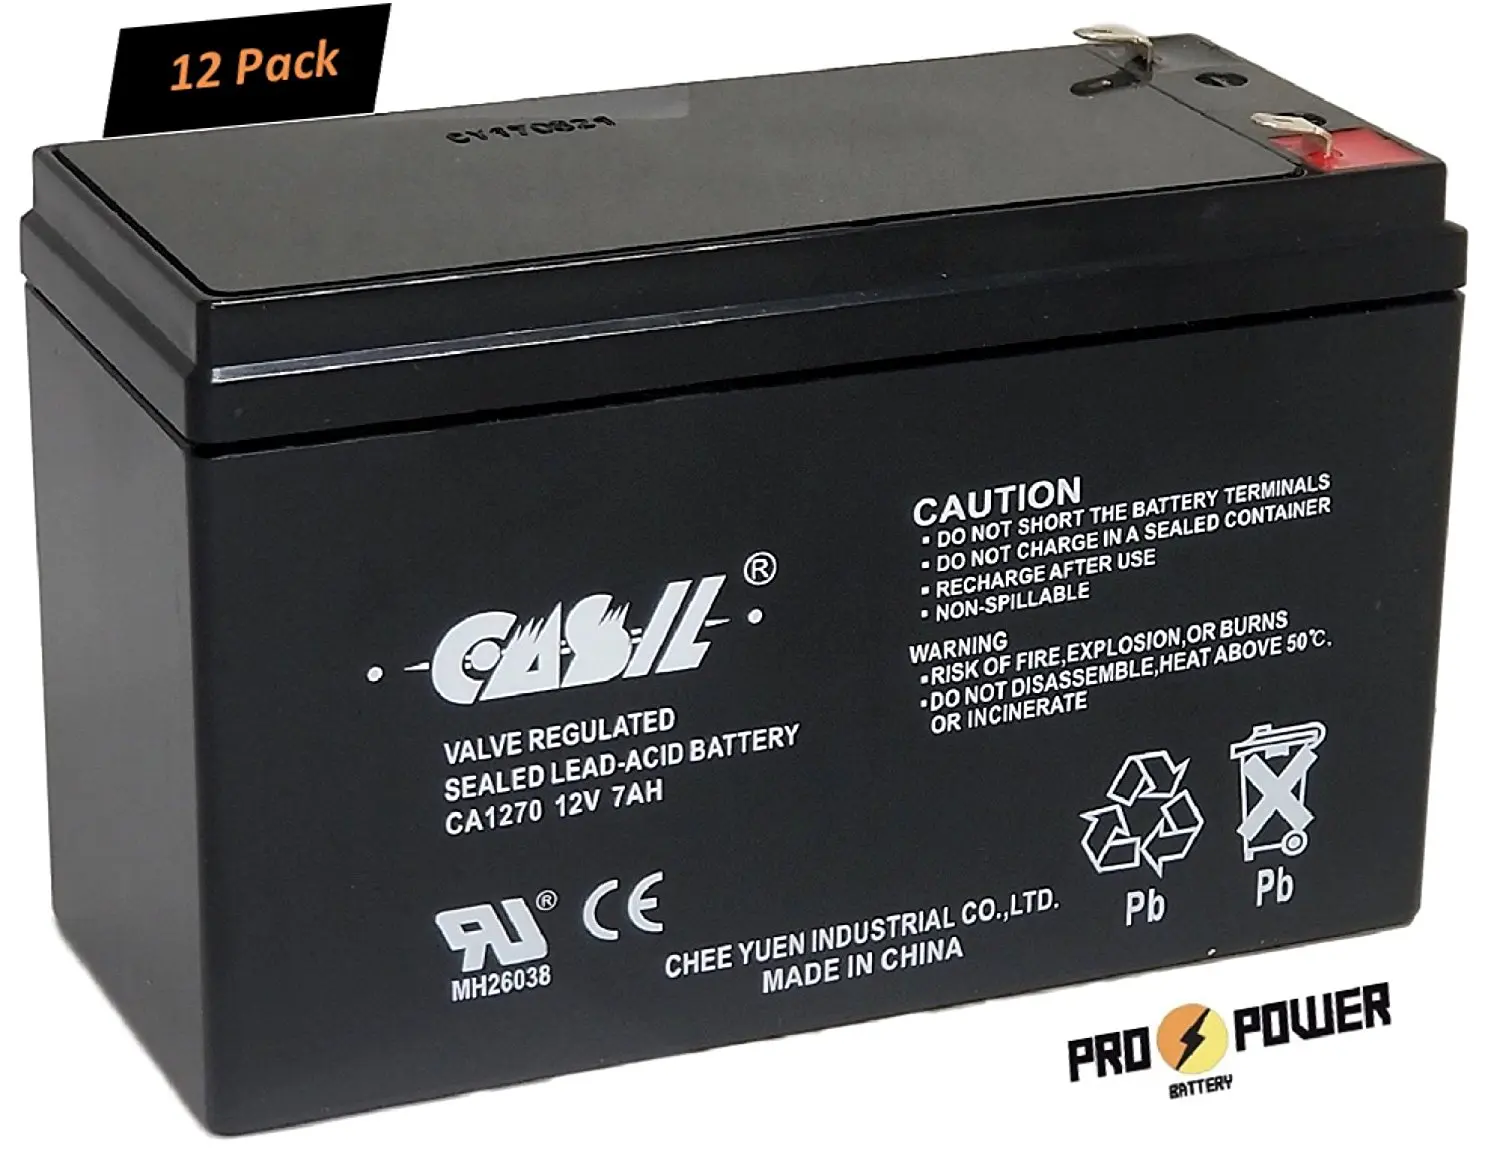 Dt 12v 7ah. Powerman Valve regulated Sealed lead-acid Battery ca1270 12v 7ah. 12v 7ah Sealed Battery. Powerman Valve regulated Sealed lead-acid Battery ca1270 12v 7ah p. Casil 12v 27 Ah.